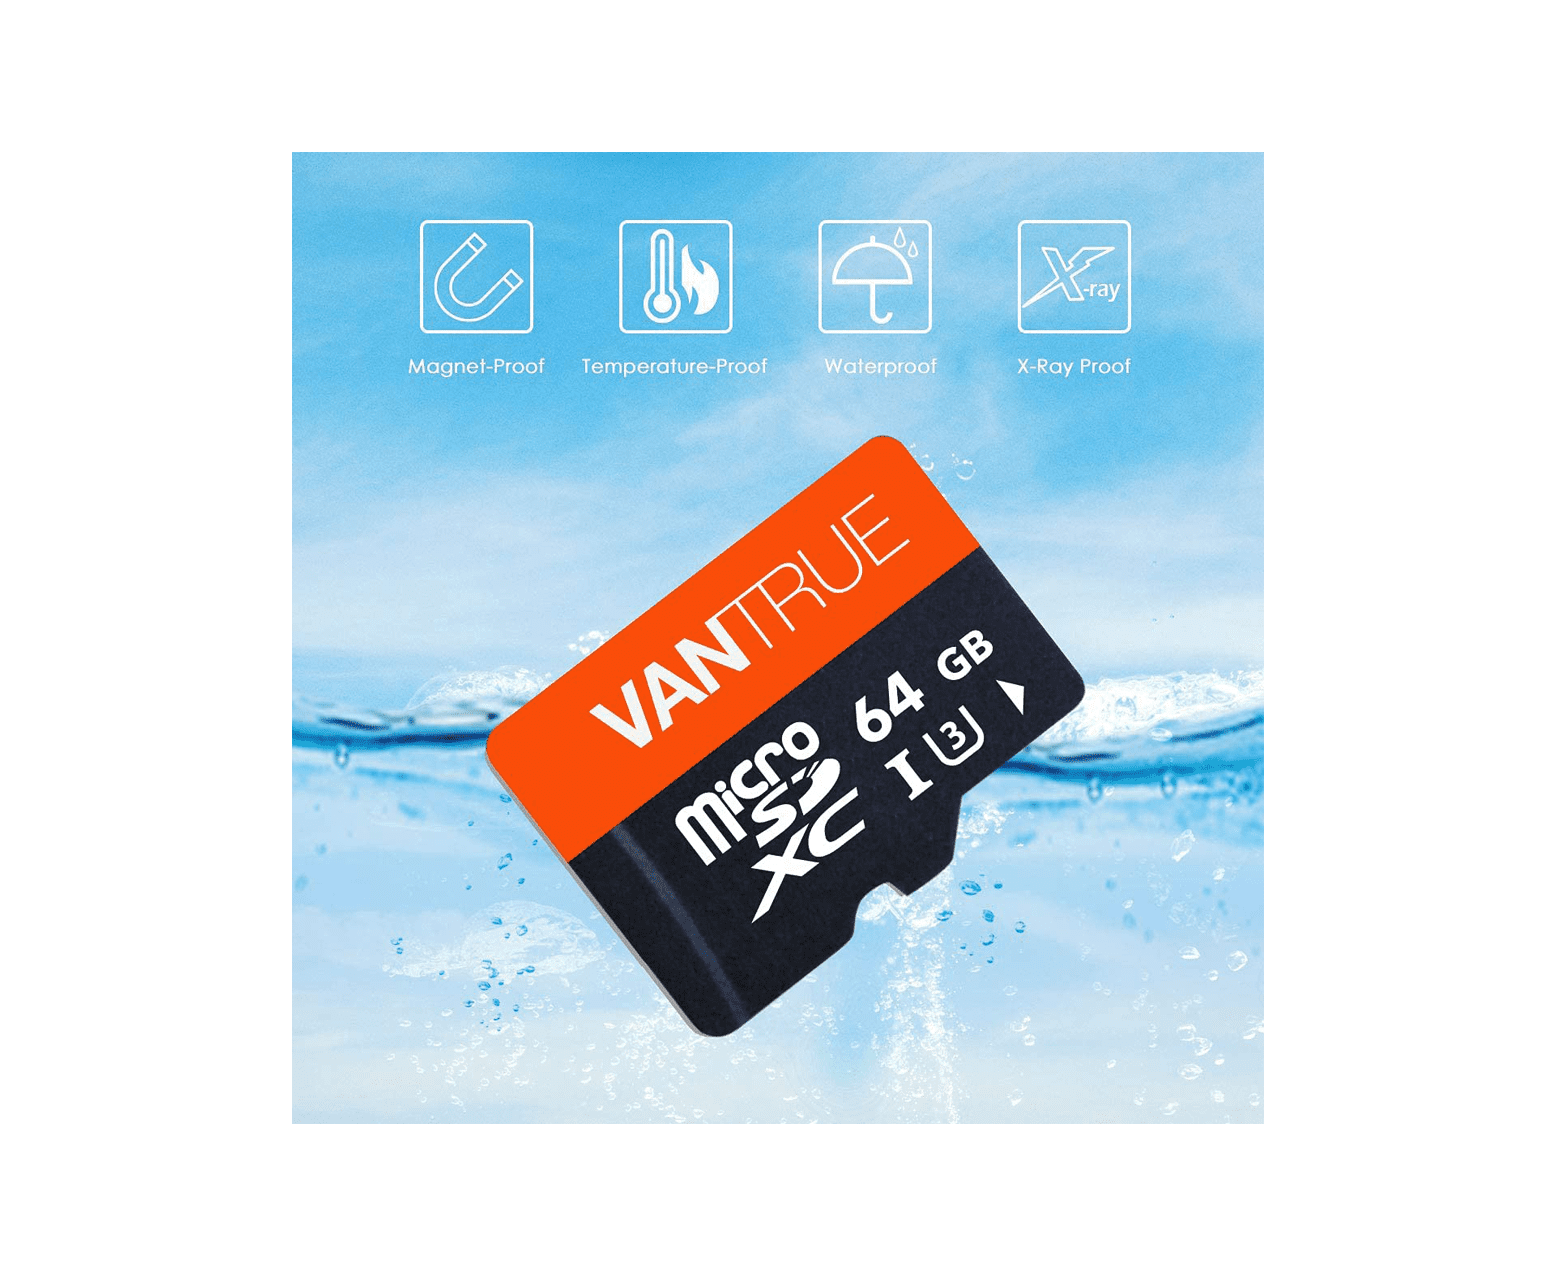 Vantrue 064 GB SD Kart